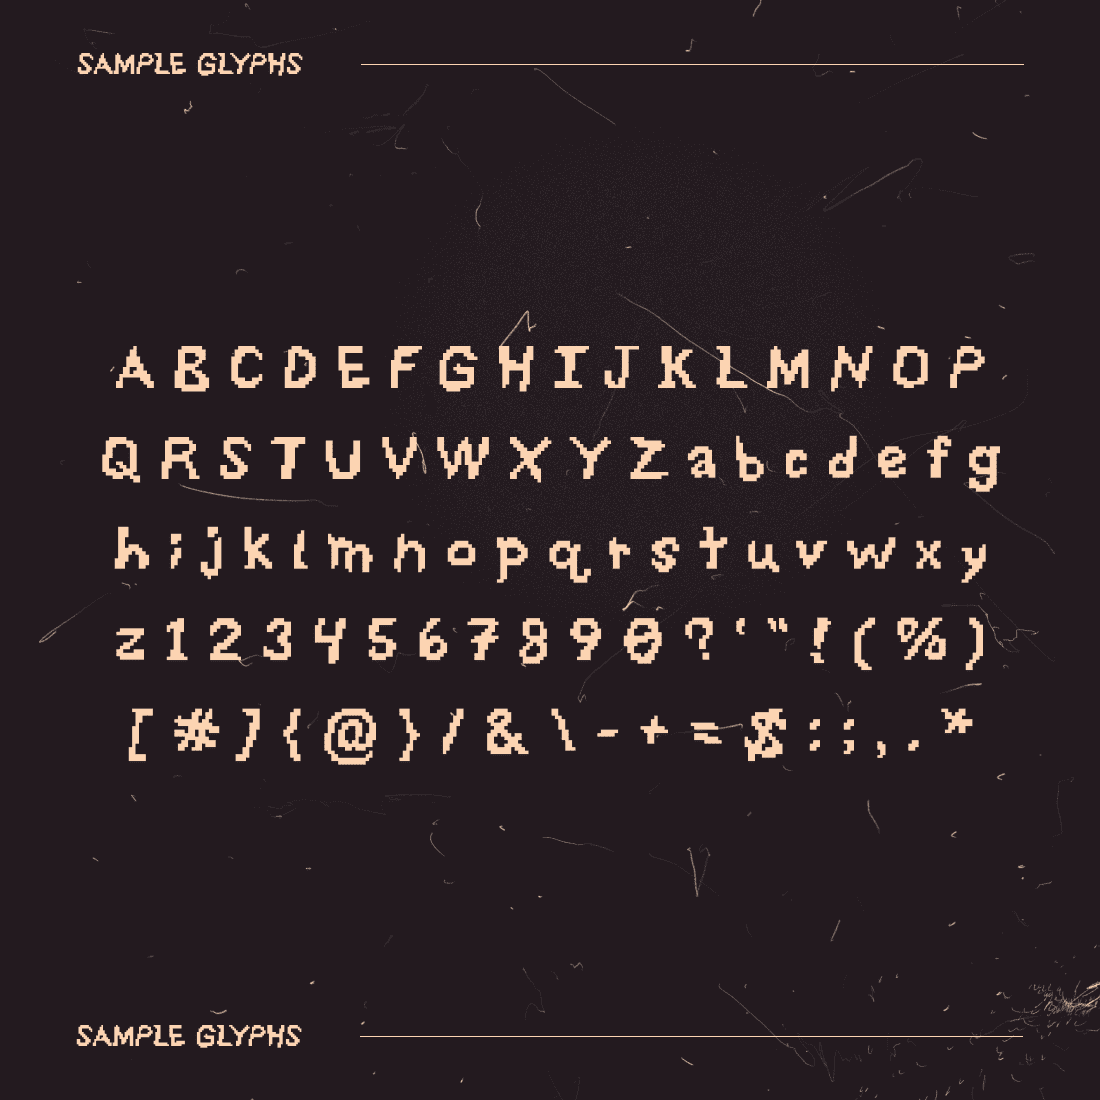 Frankheart Pixel Font Sample Glyphs.